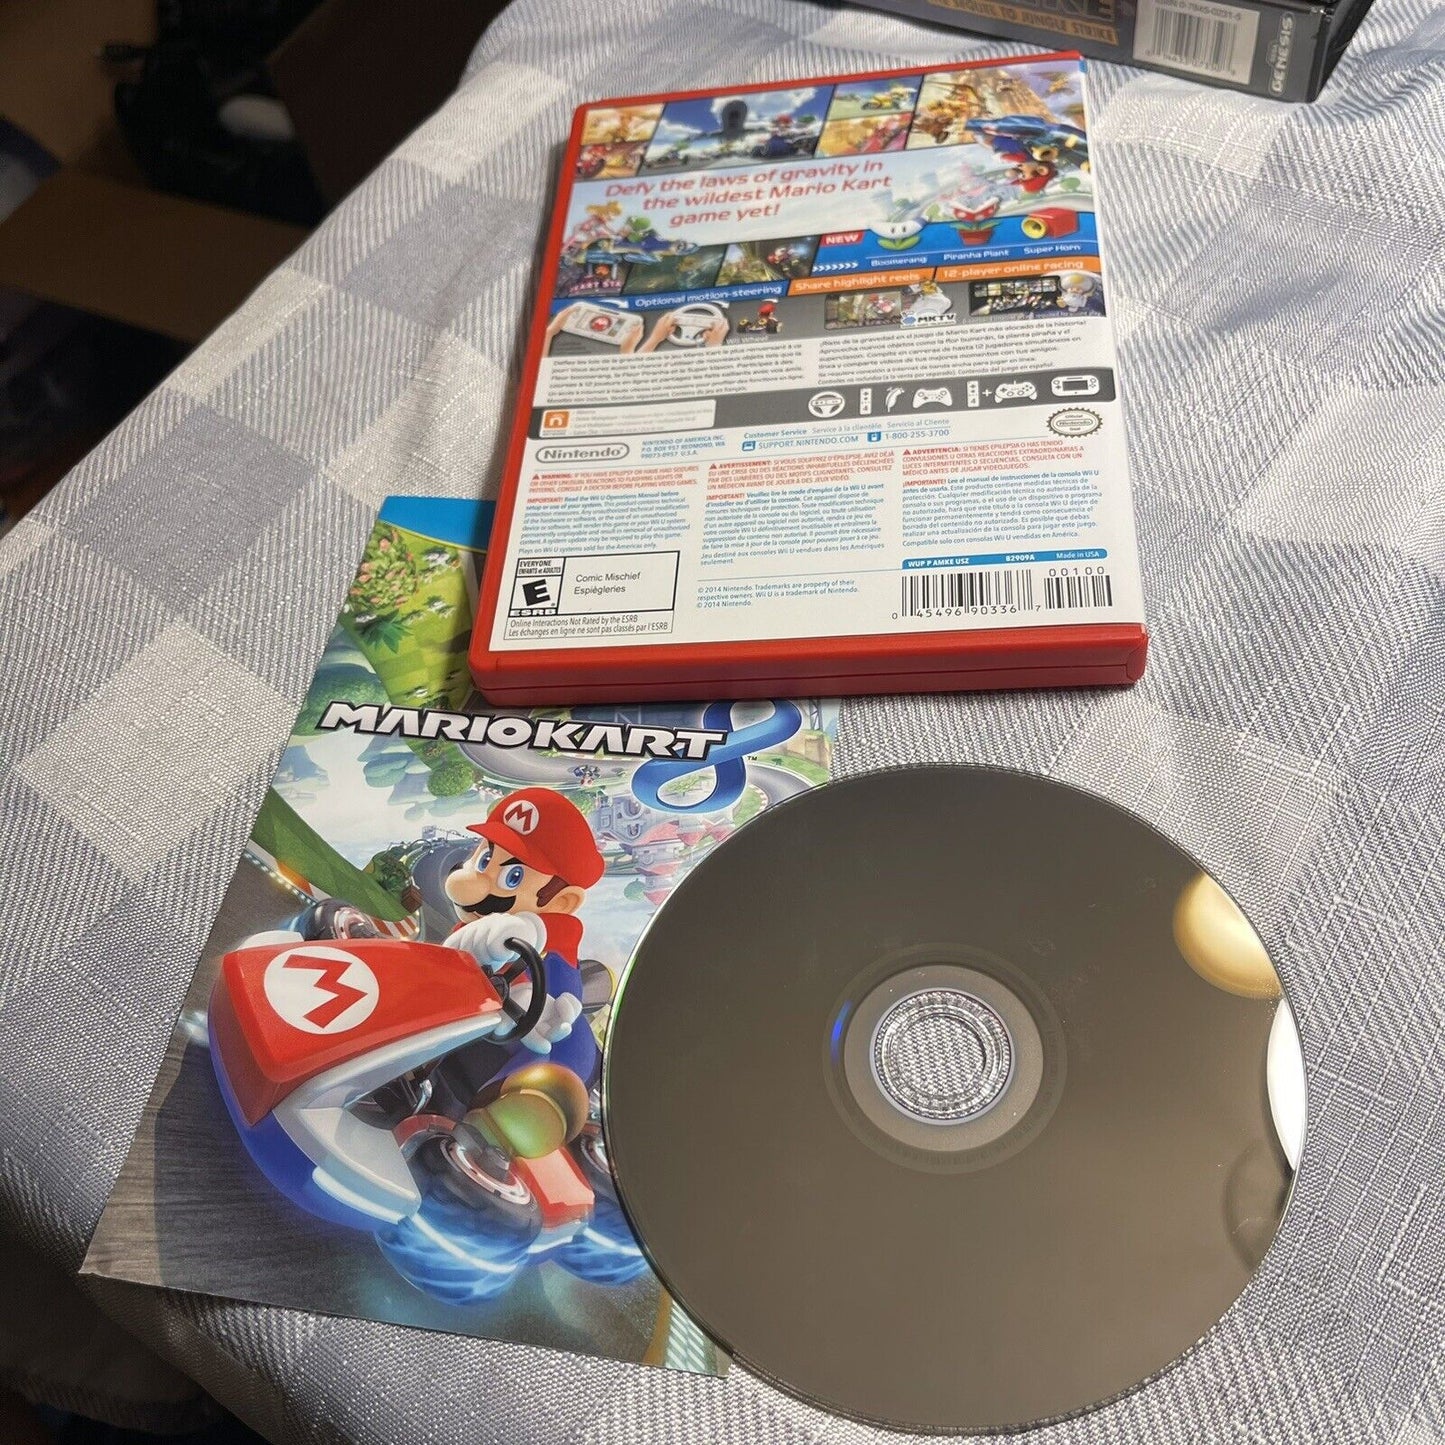 Mario Kart 8 - Nintendo Wii U - Tested!